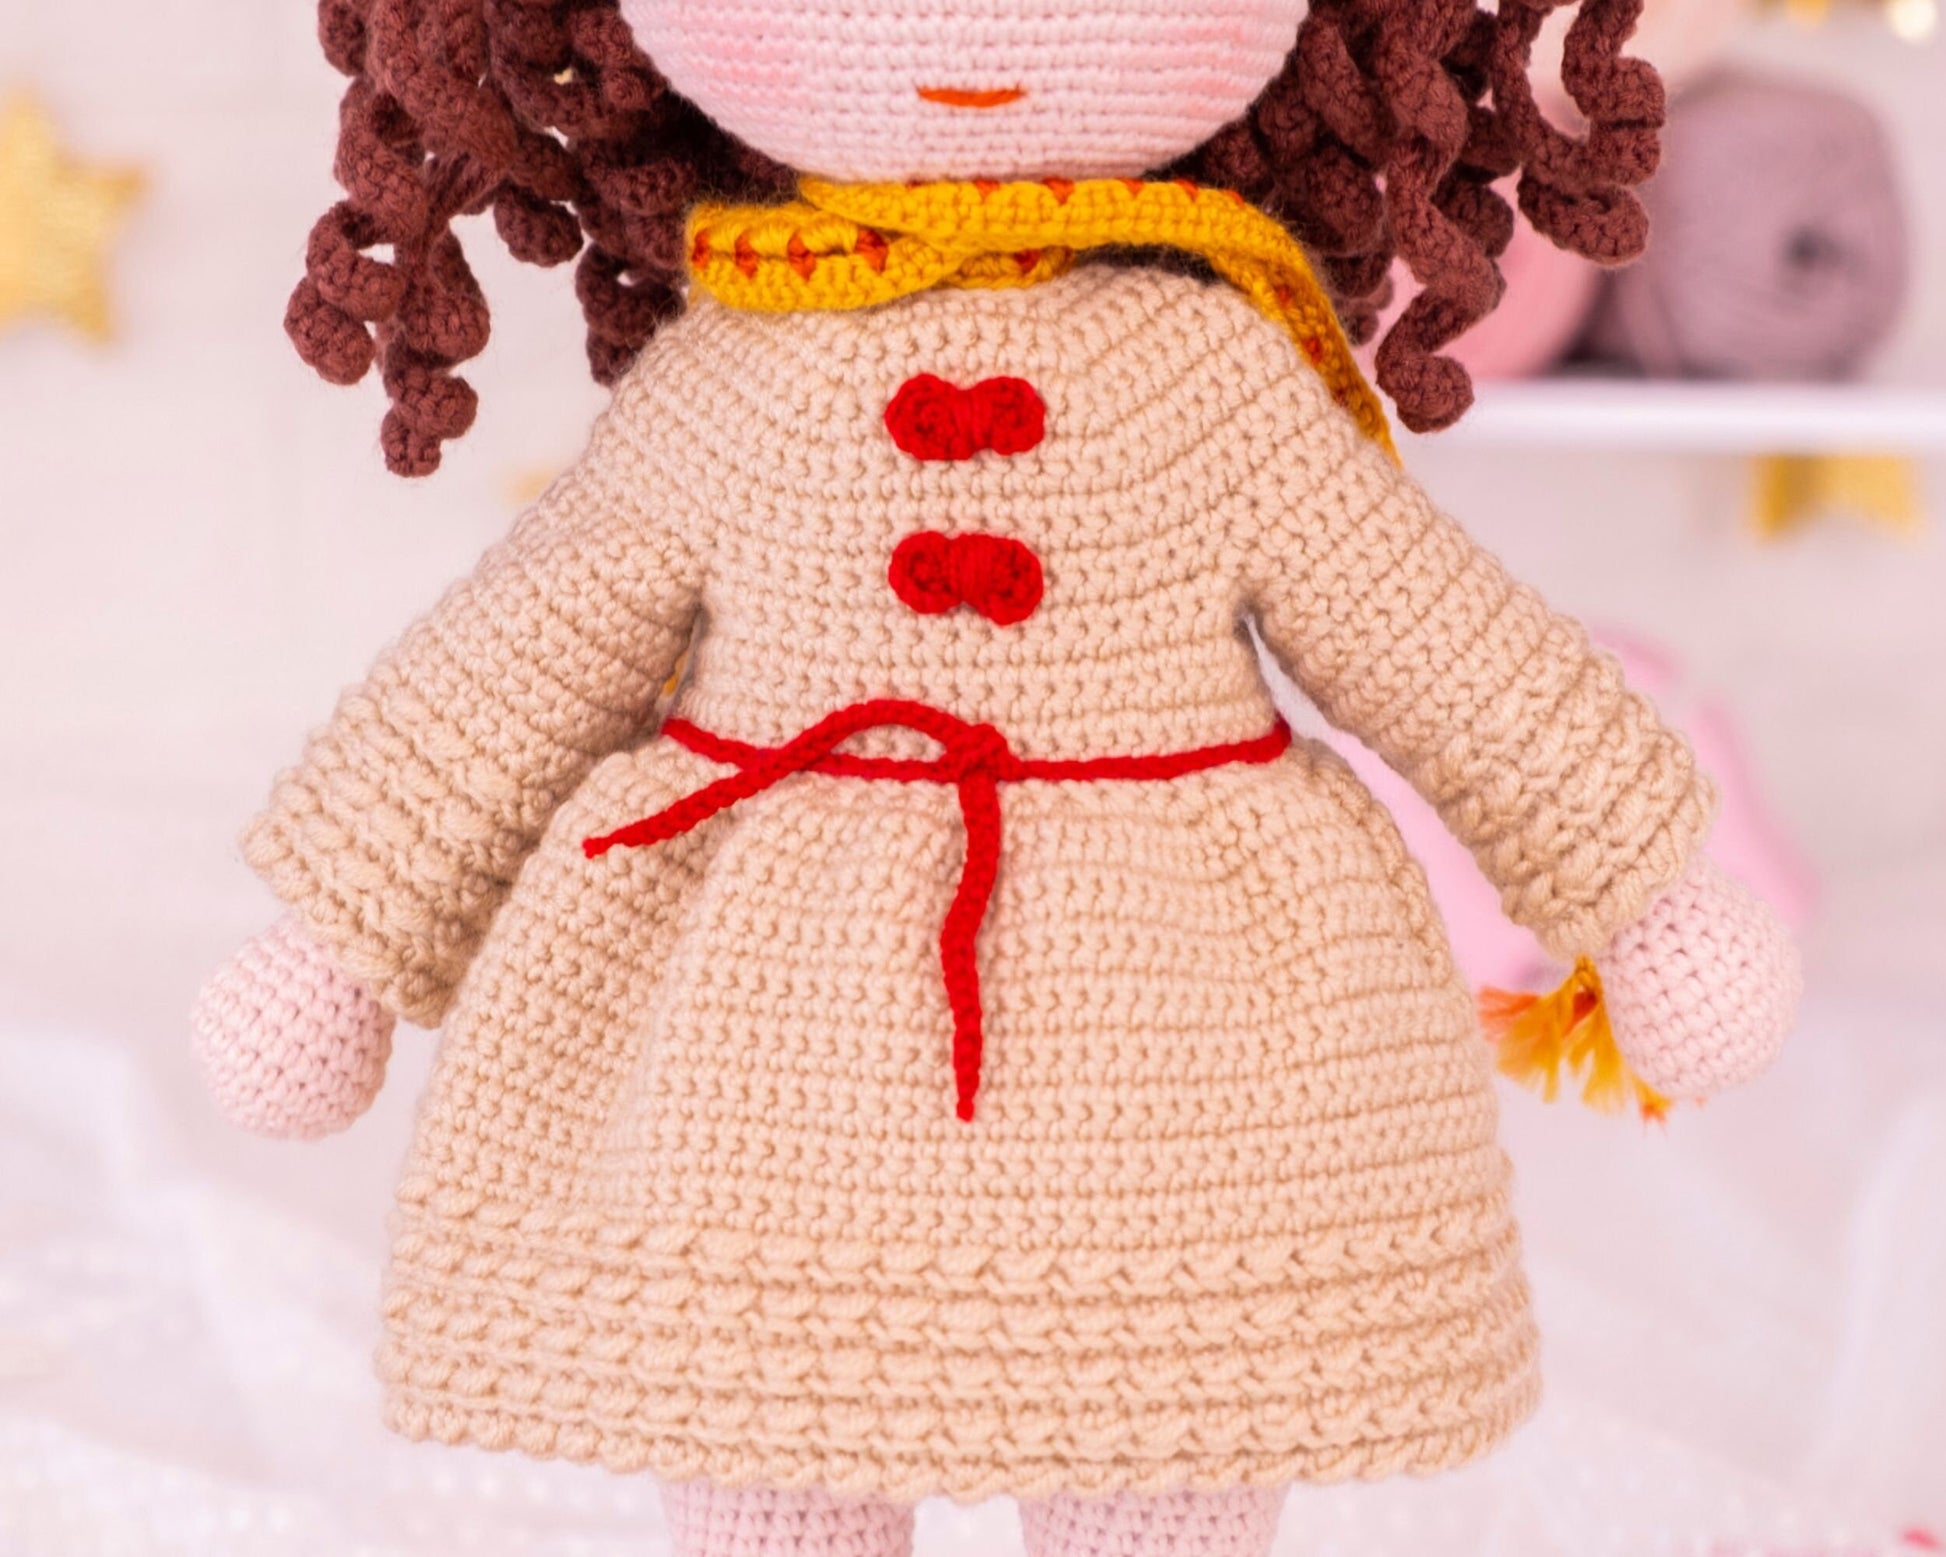 Crochet Doll, Curly Hair Doll, Amigurumi Doll, Granddaughter Gift, Daughter Gift, Christmas Doll, Knitted Dolls, Handmade Doll, Soft Doll